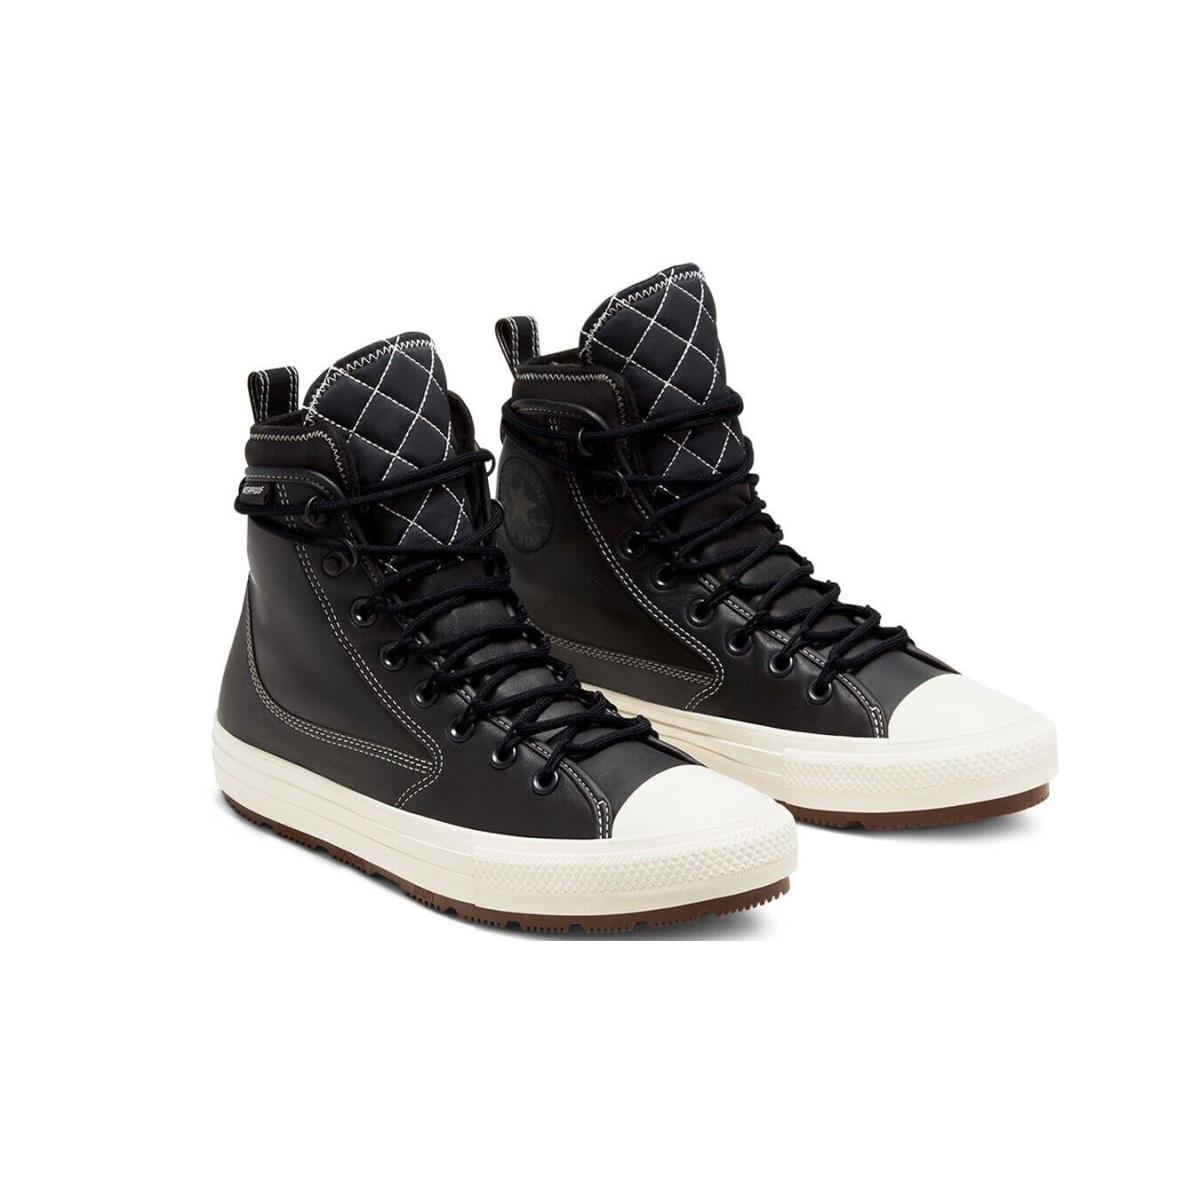 Converse Boots Sz 12 Black Ctas All Terrain HI Waterproof Leather Shoes 168863C